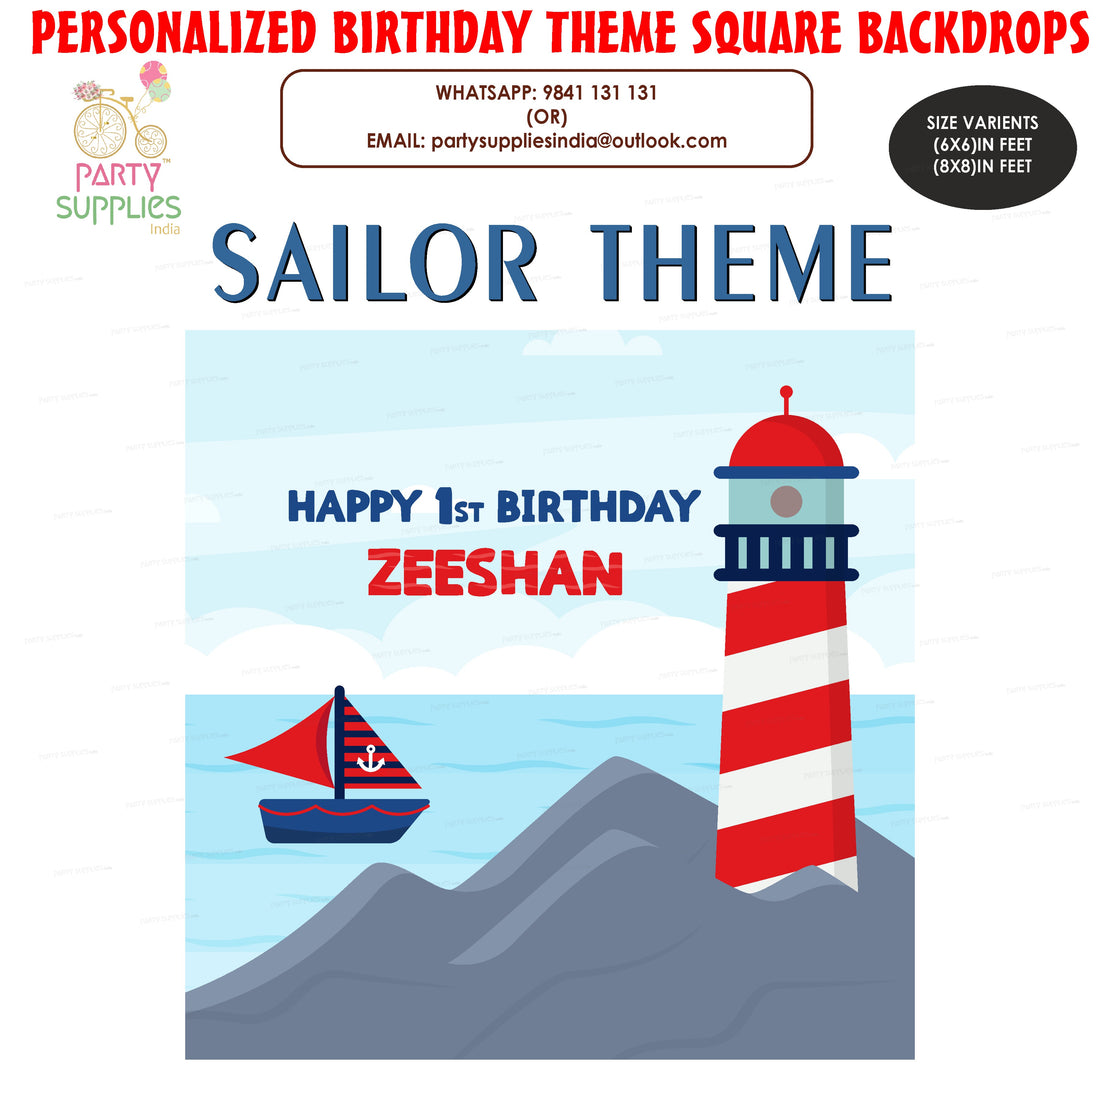 PSI Sailor Theme Premium  Square Backdrop